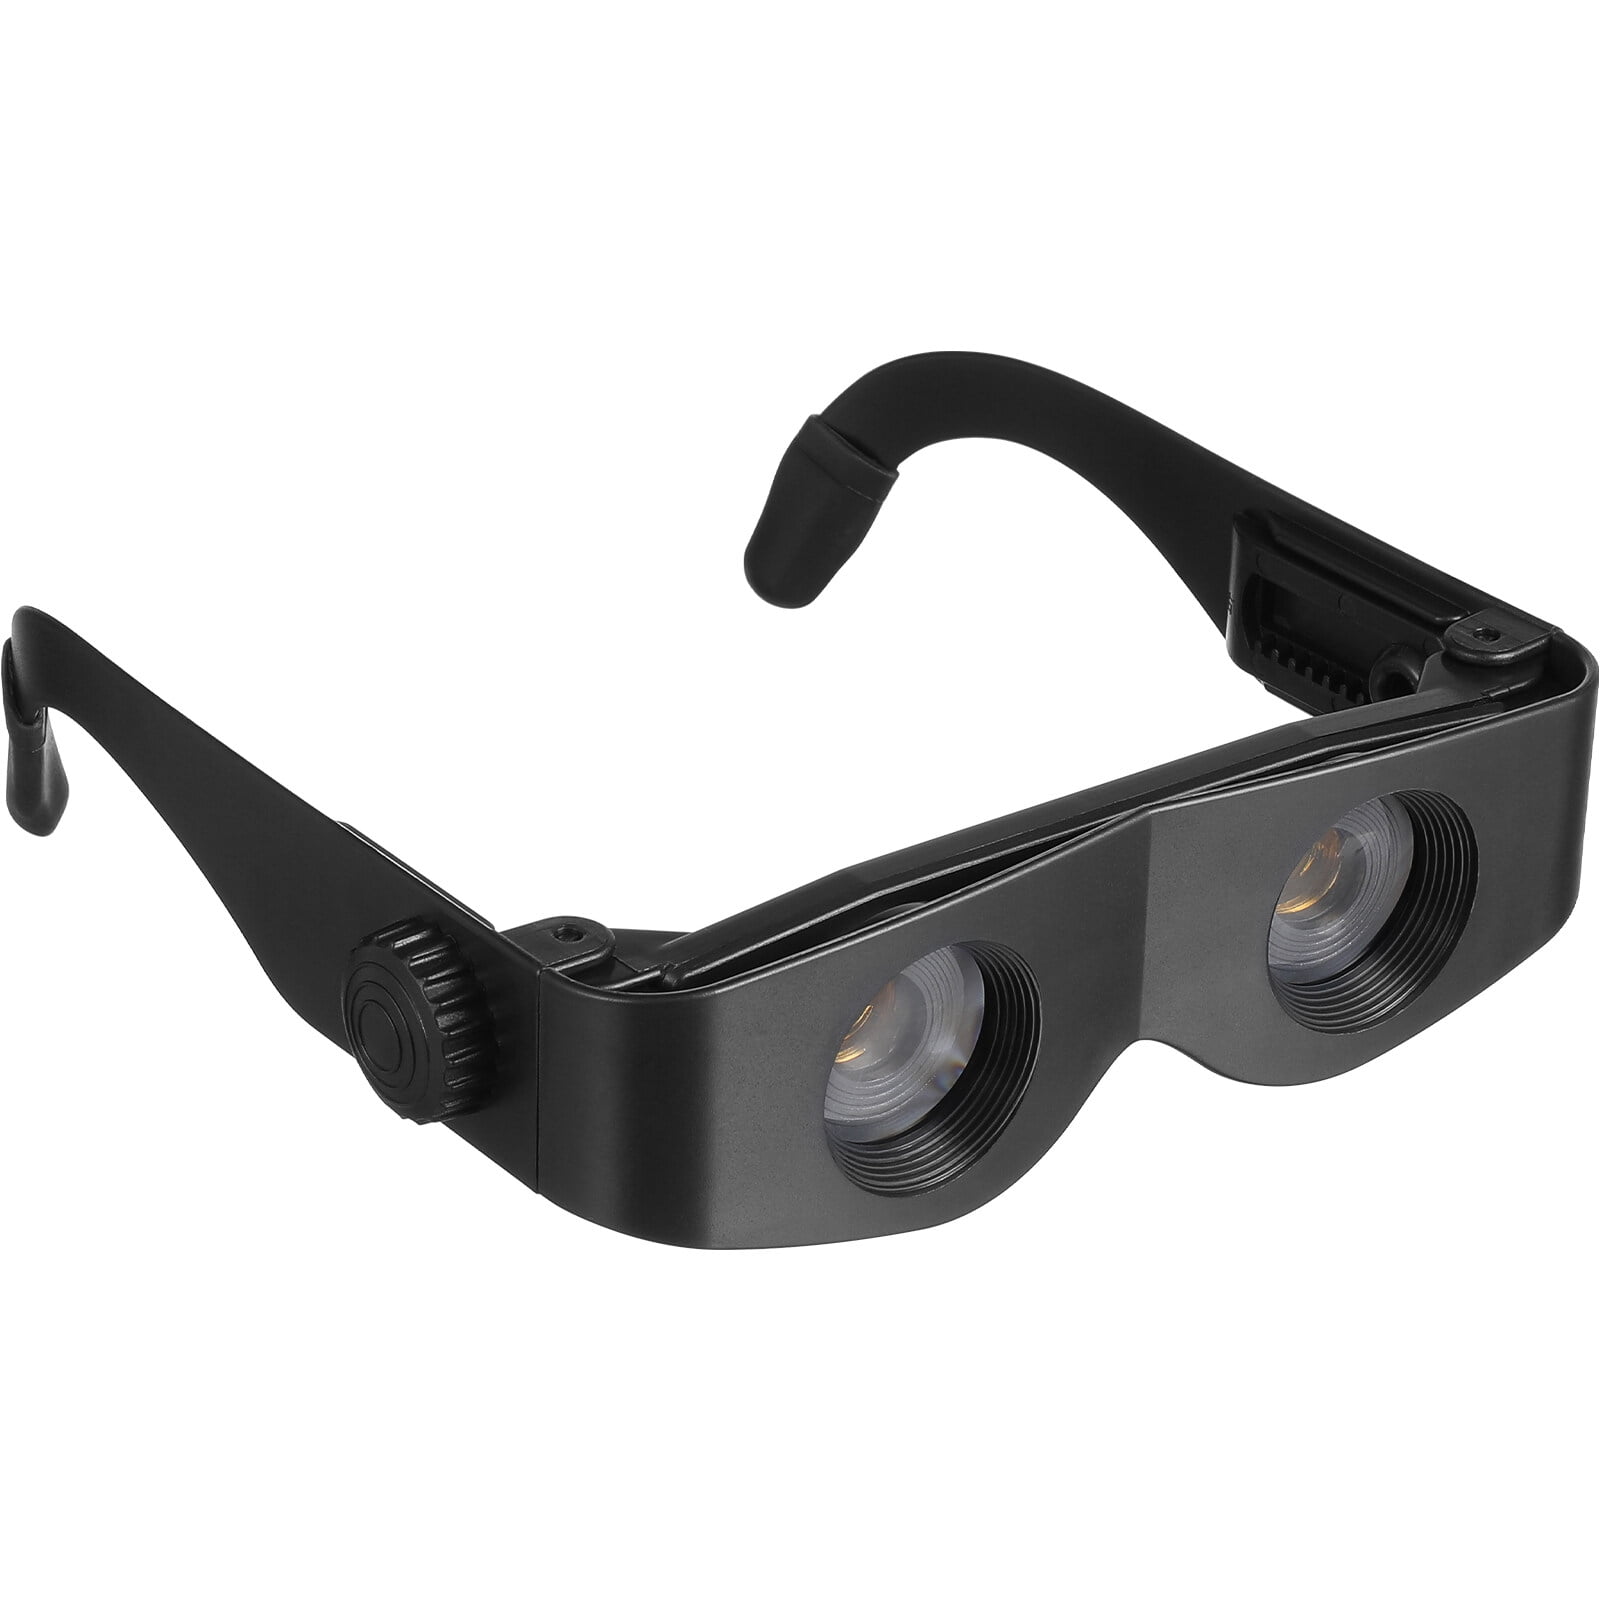 Opera Glasses Handsfree Binocular Glasses 400% Magnification